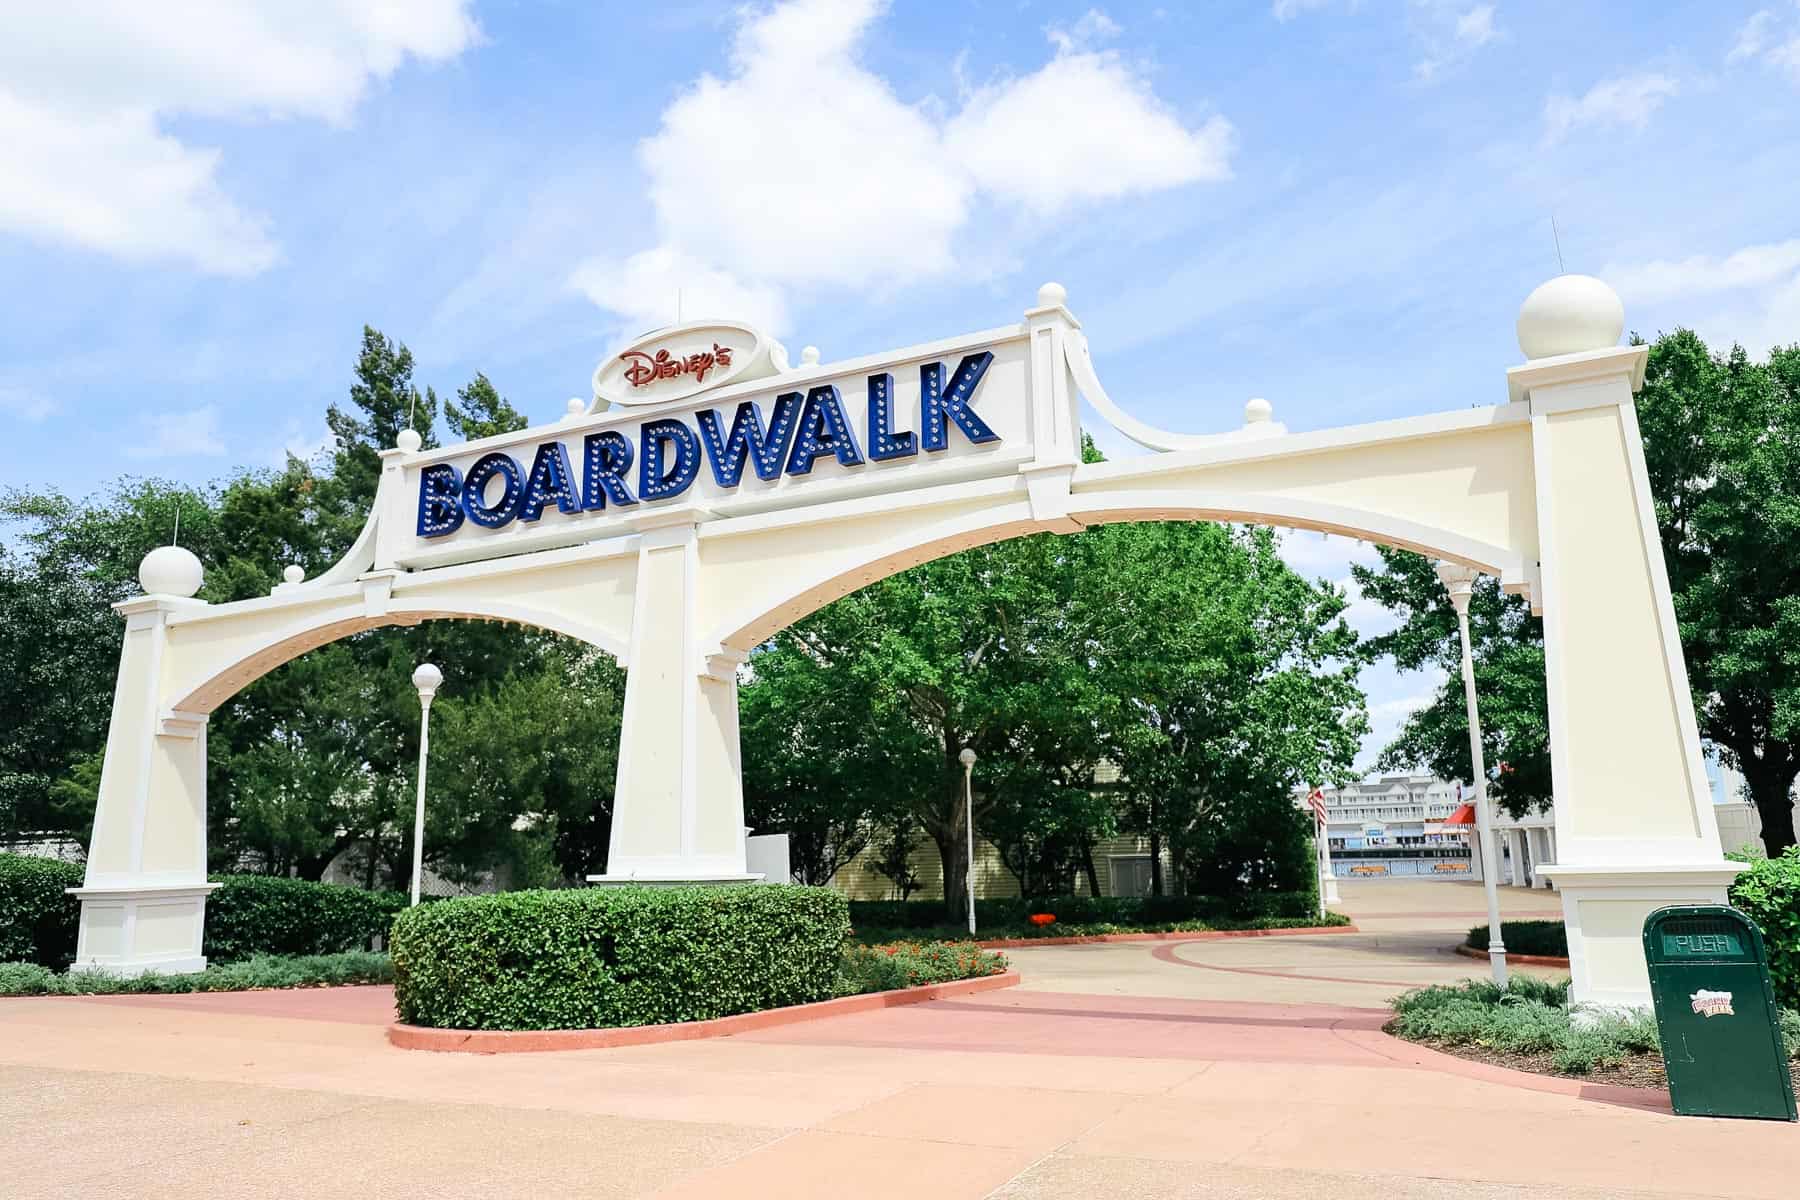 sign that says Disney's Boardwalk 